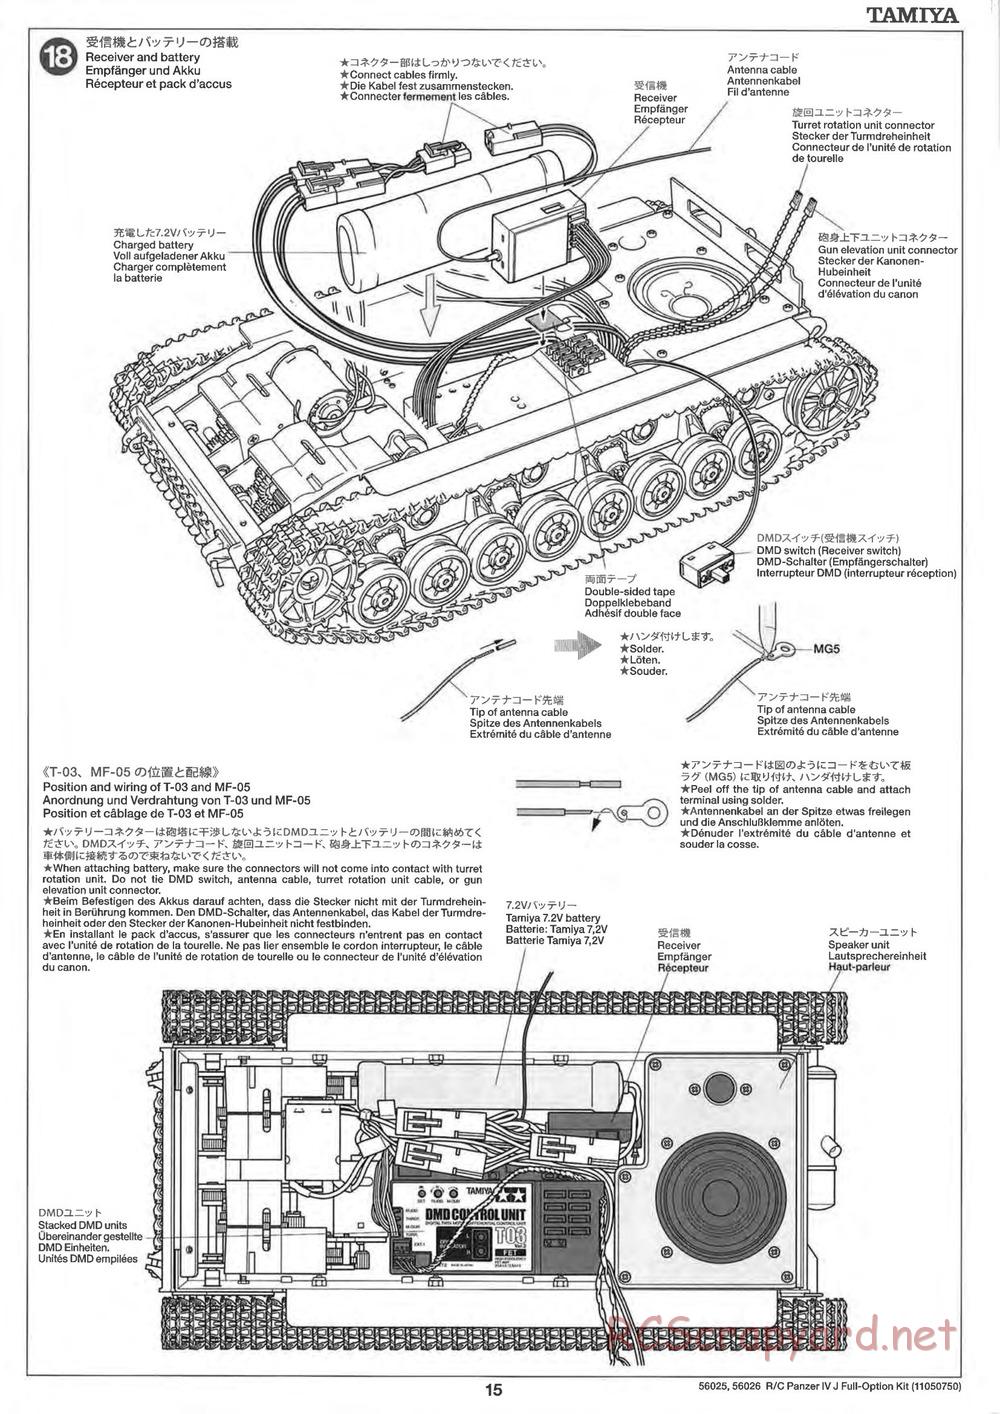 Tamiya - Panzerkampfwagen IV Ausf.J - 1/16 Scale Chassis - Manual - Page 15